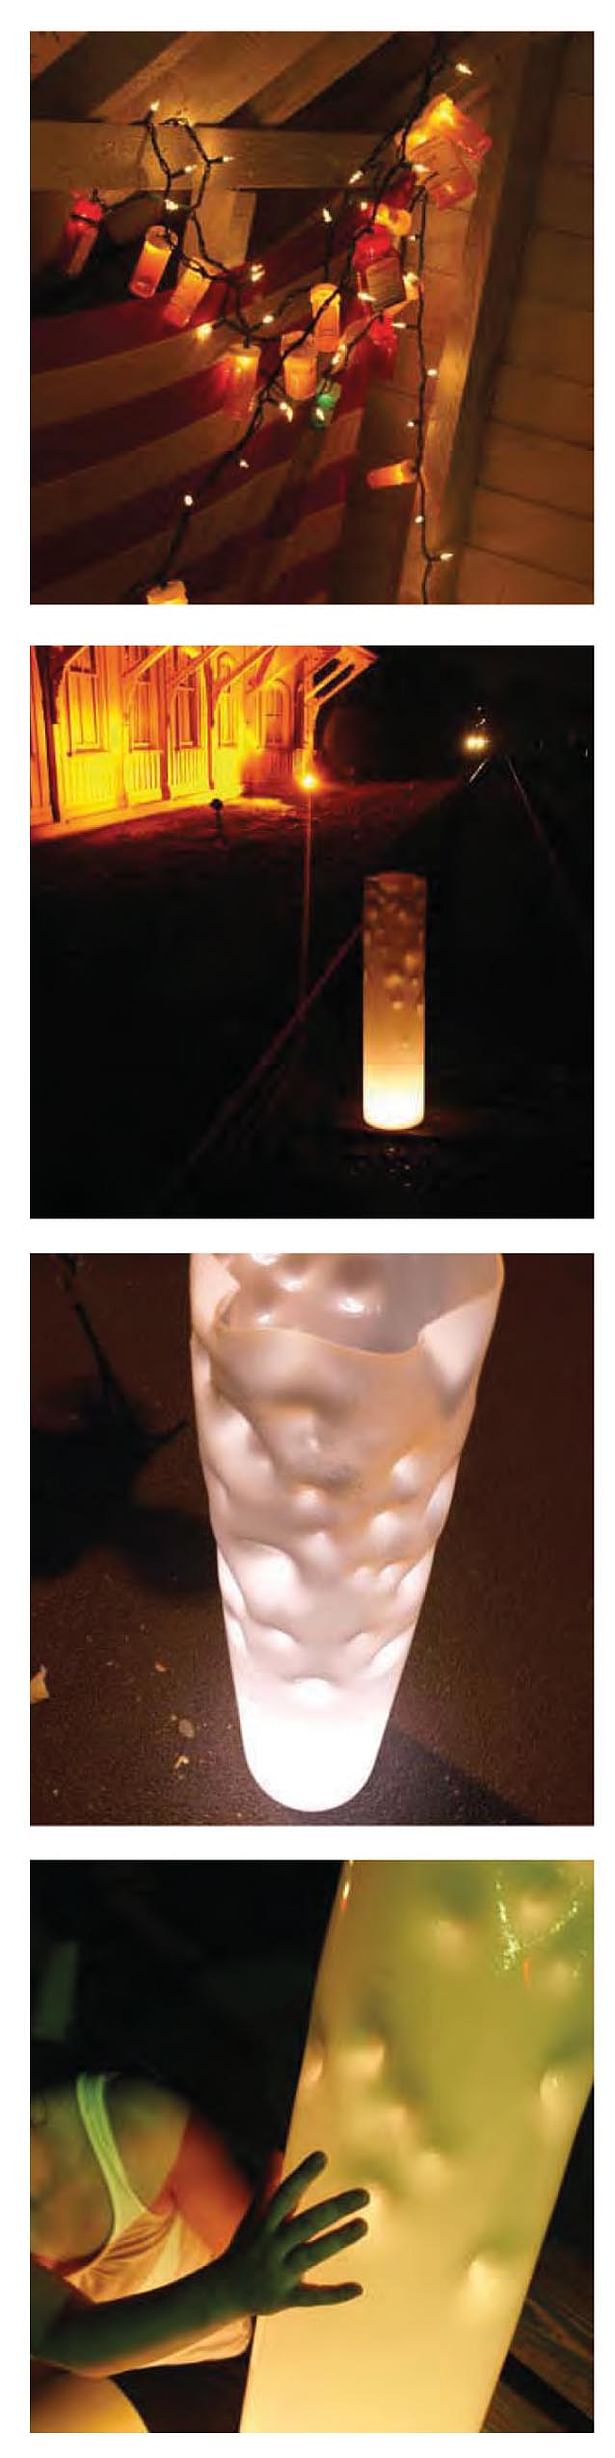 Lamp/Lighting design studies. (w/ Lana Zellner)